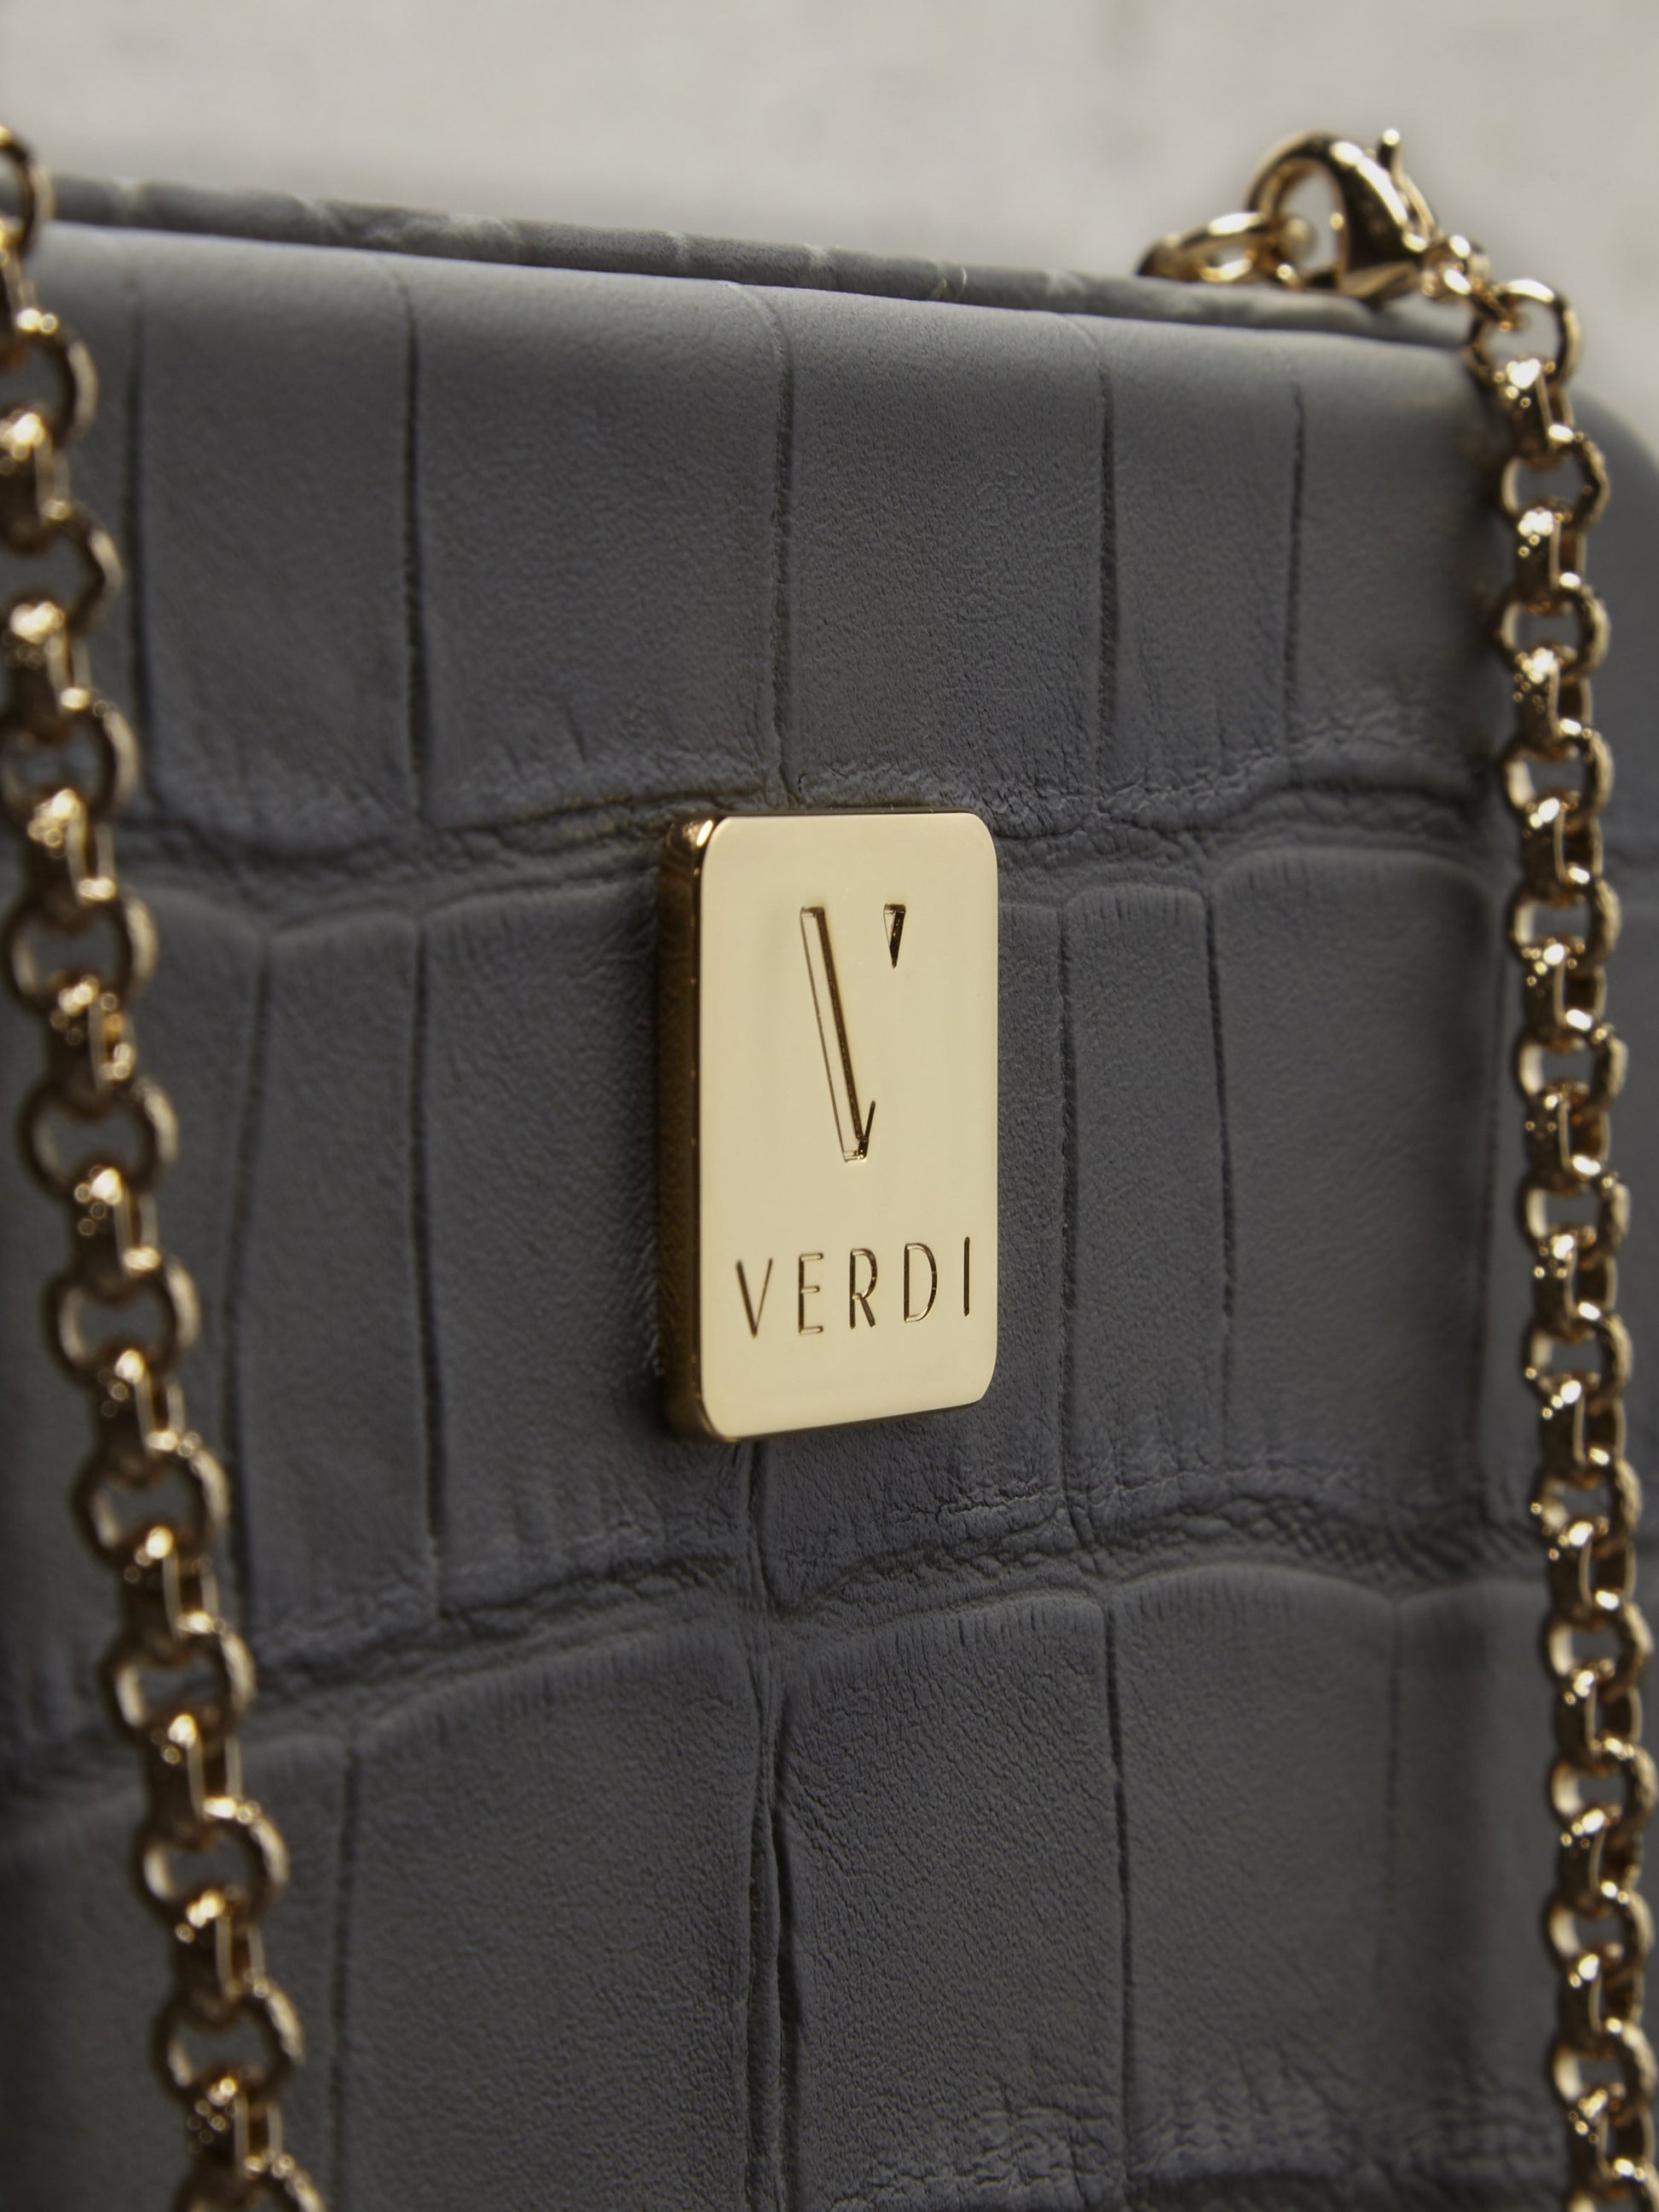 Atelier Verdi grey crocodile print leather clutch bag, gold Verdi logo detail